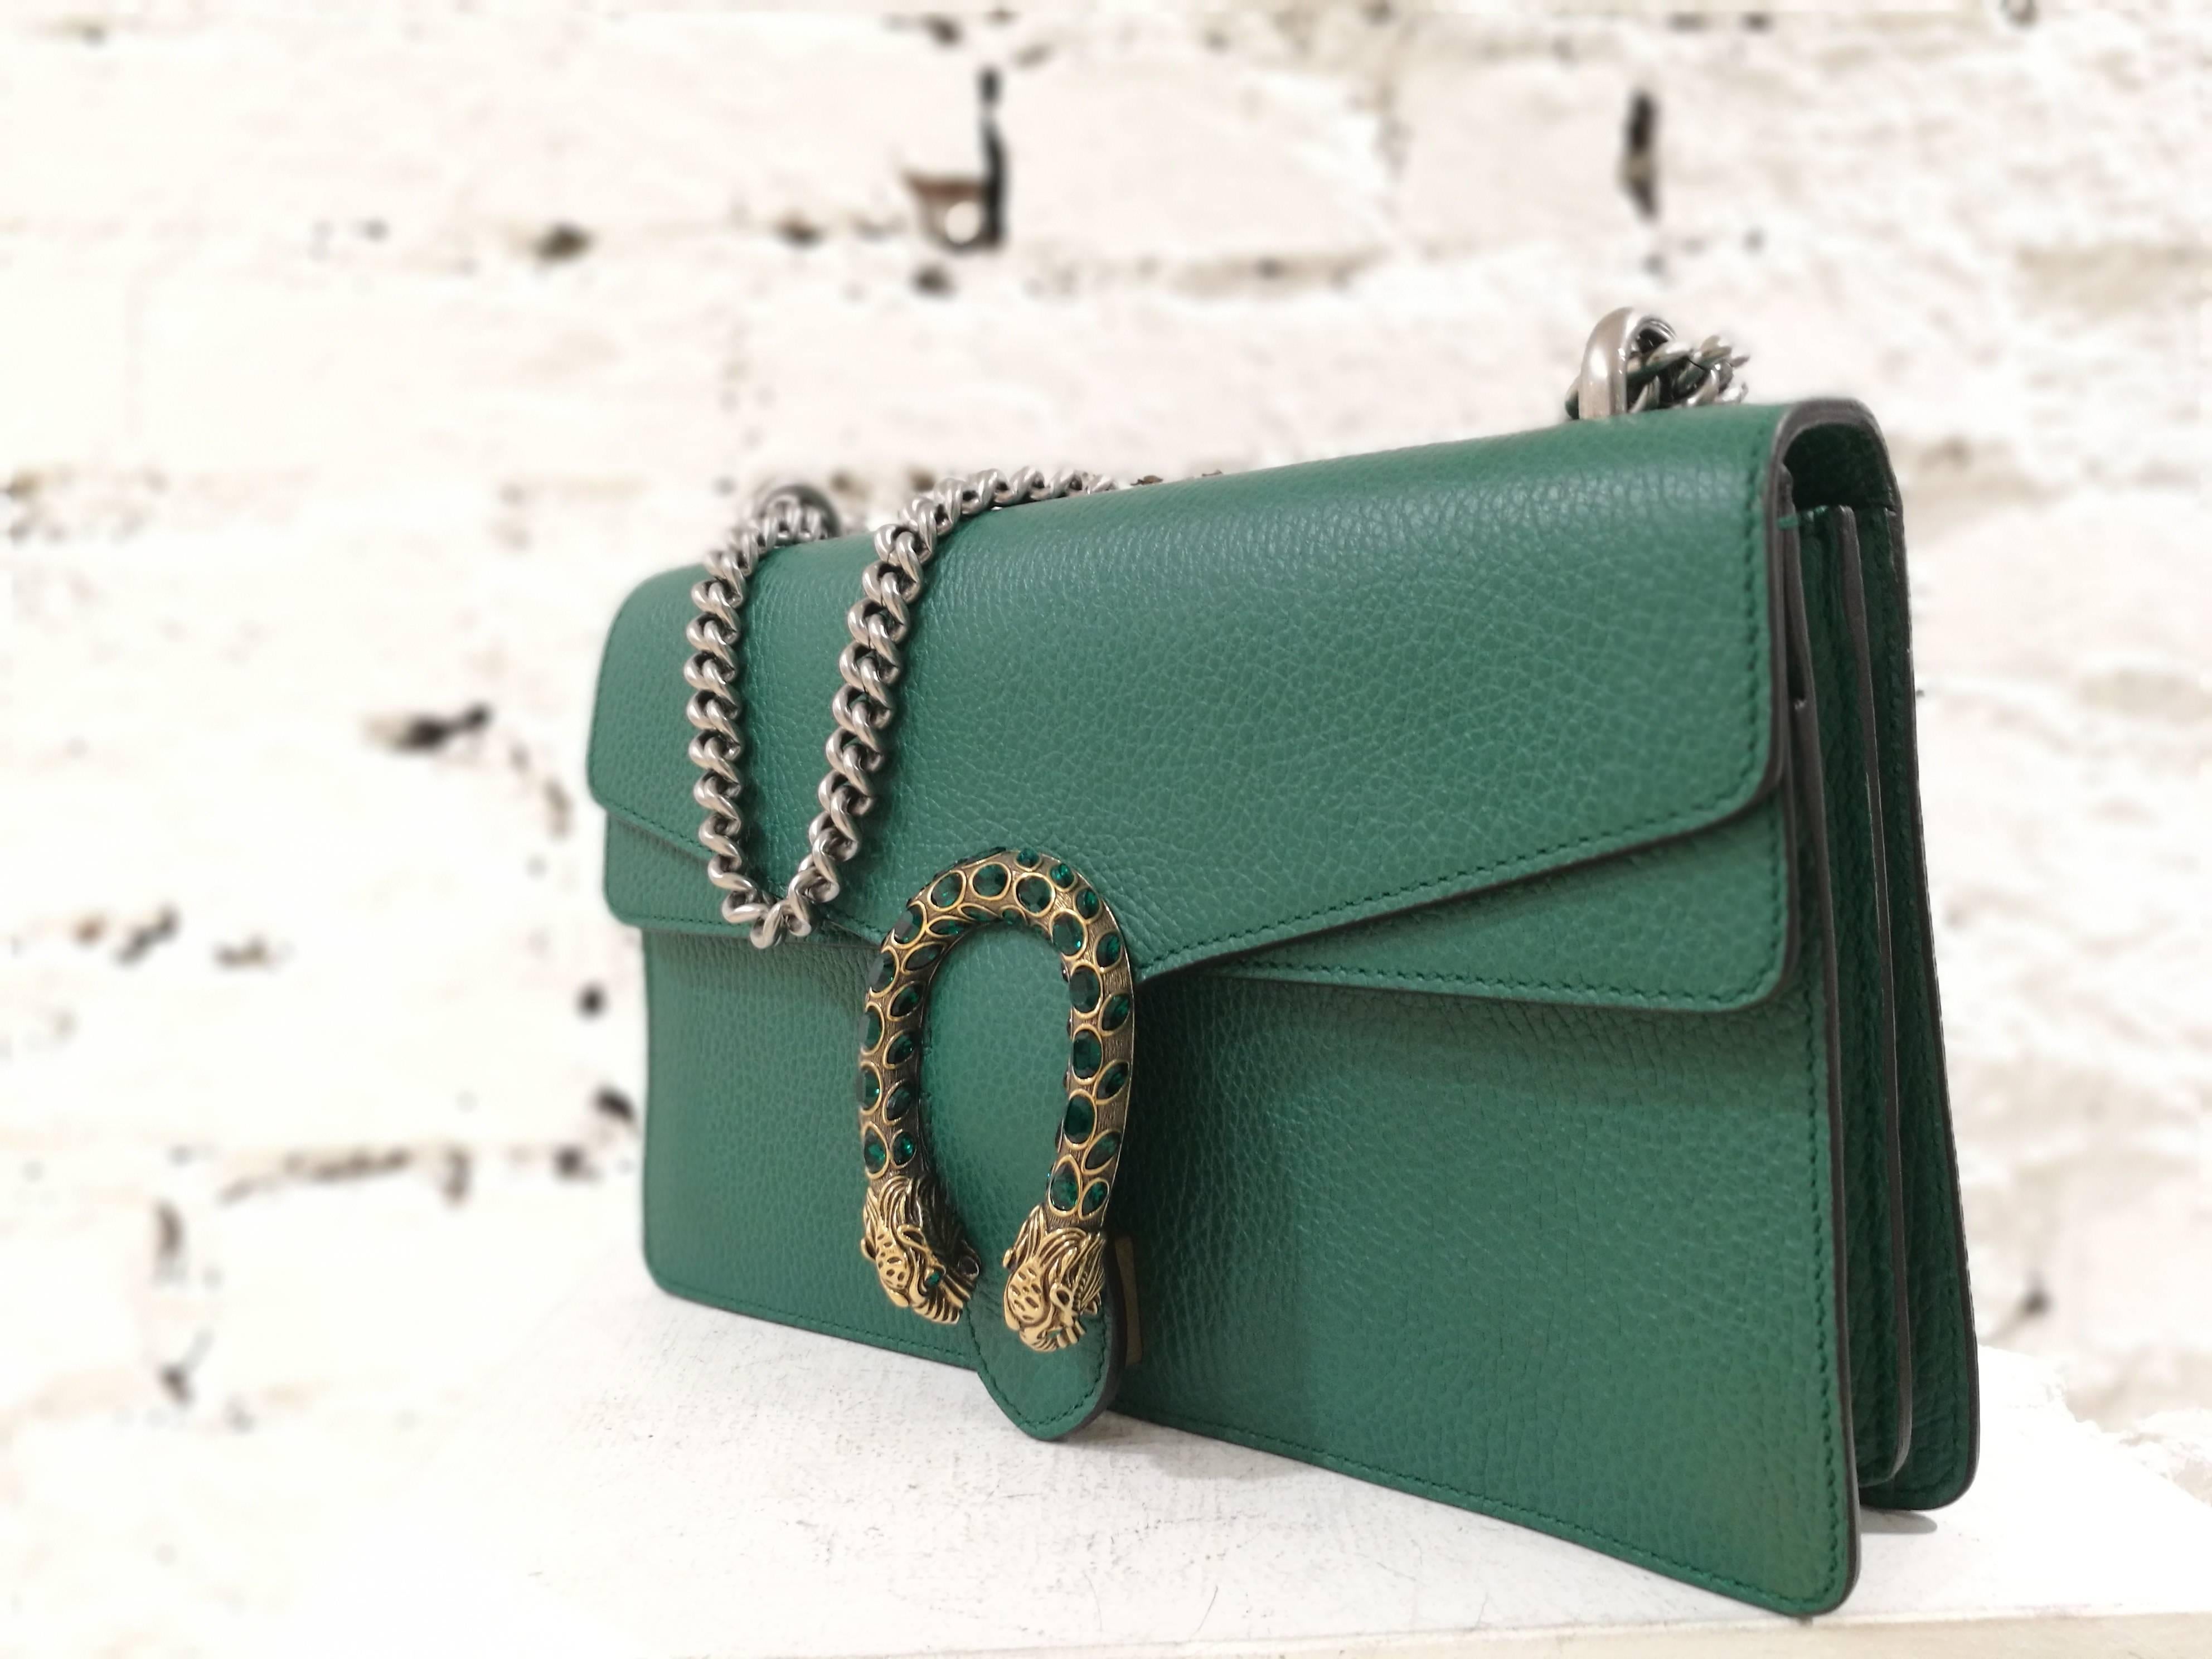 Gucci green leather Dionysus Bag

silver tone chain, gold tone hardware
unworn